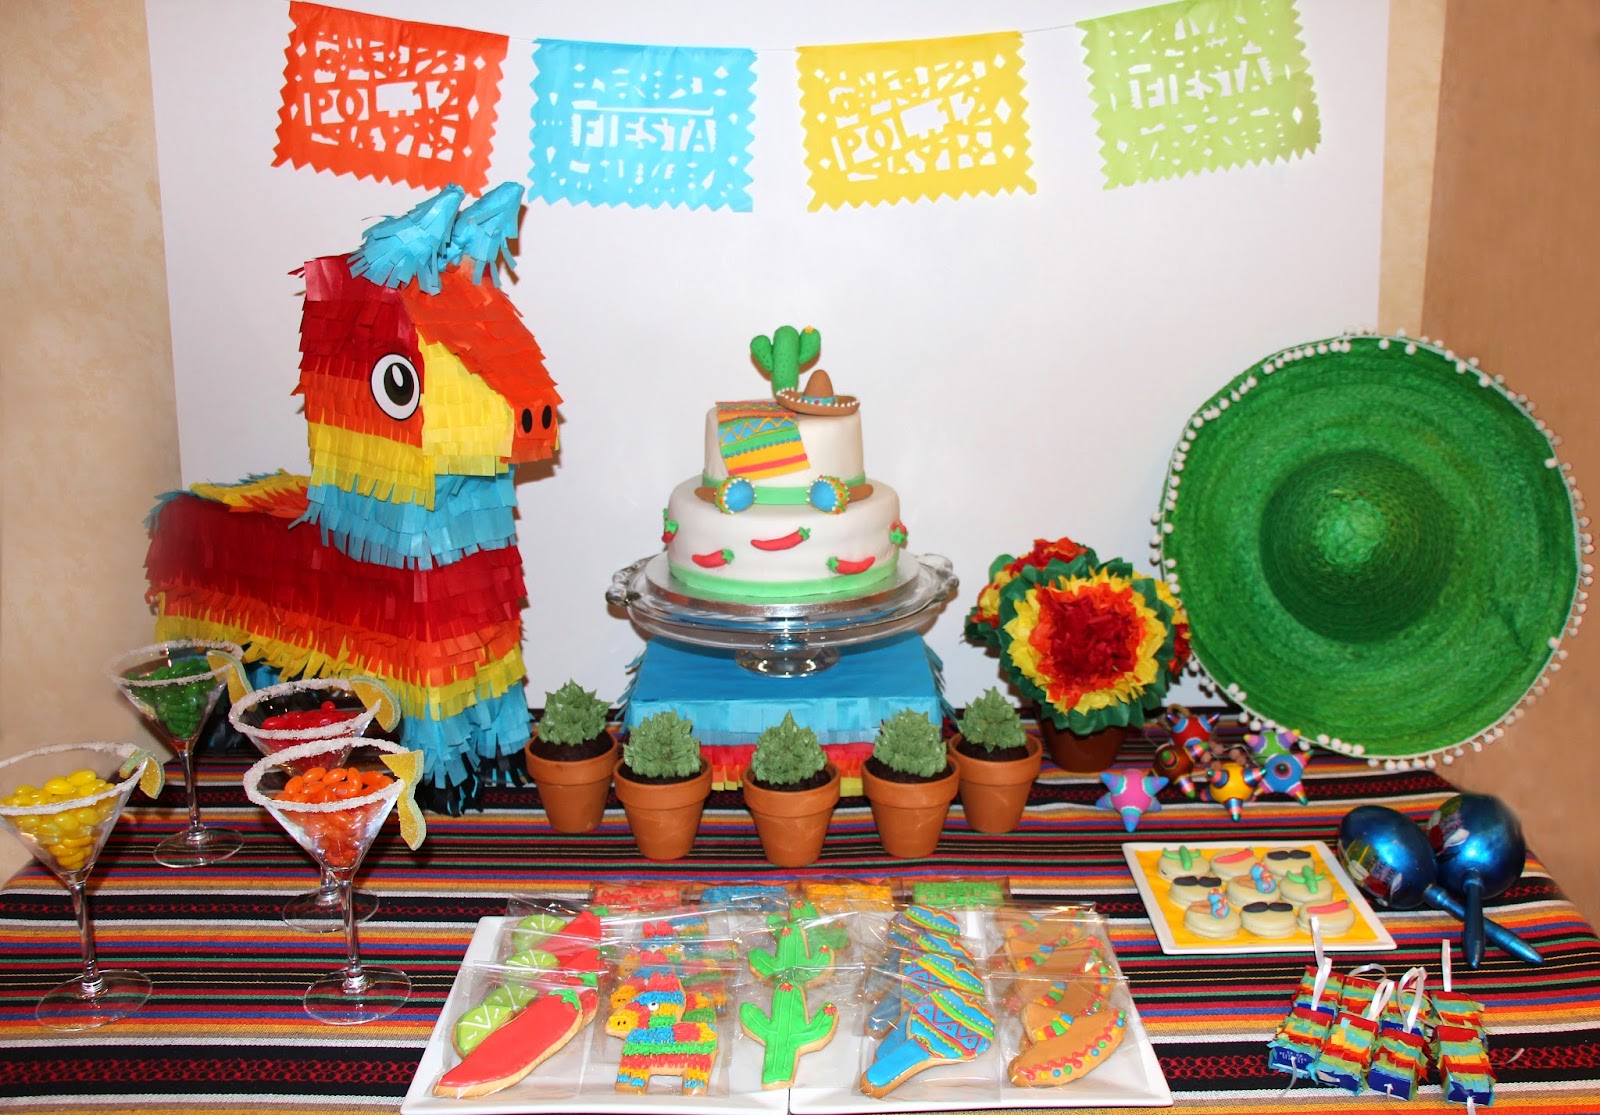 Mardefiesta: Fiesta mexicana